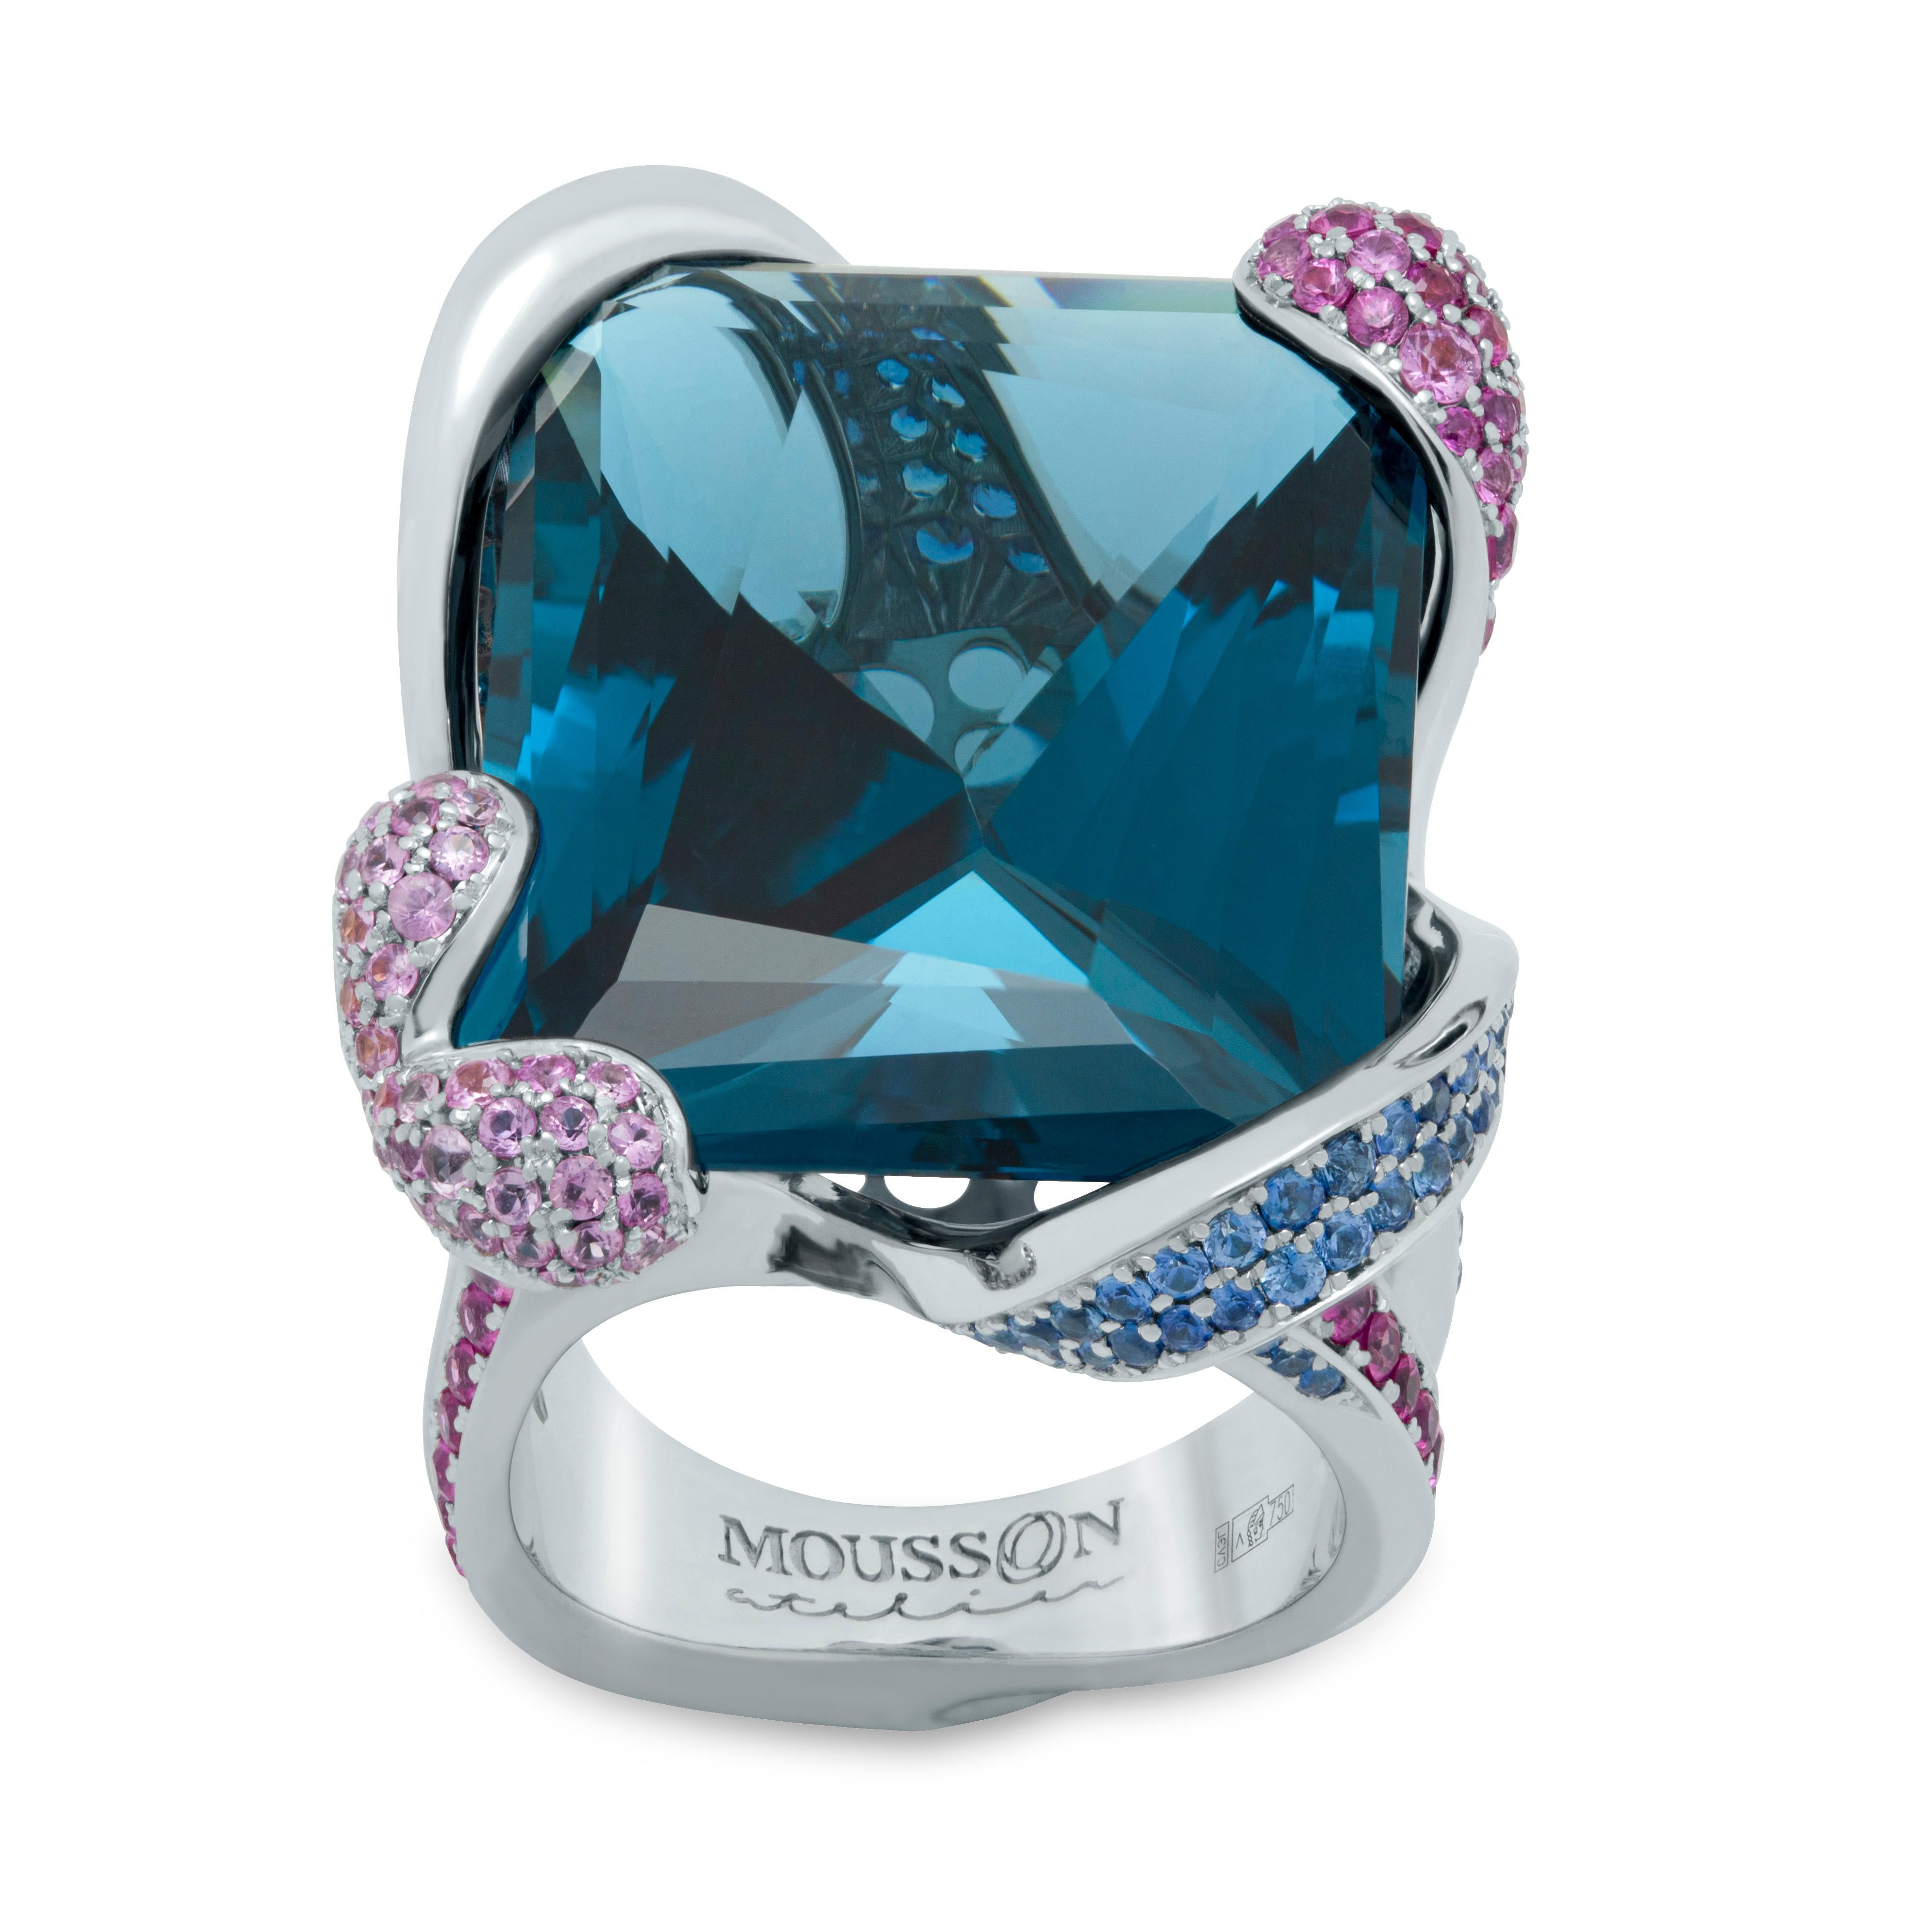 London Topaz 41.79 Carat Blue Pink Sapphires 18 Karat White Gold New Age Ring
Look at this spectacular London Topaz 41.79 Ct, 151 Pink Sapphires weighing 2.27 Carat, and 138 Blue Sapphires weighing 2.13 Carat combination. This gleaming ensemble